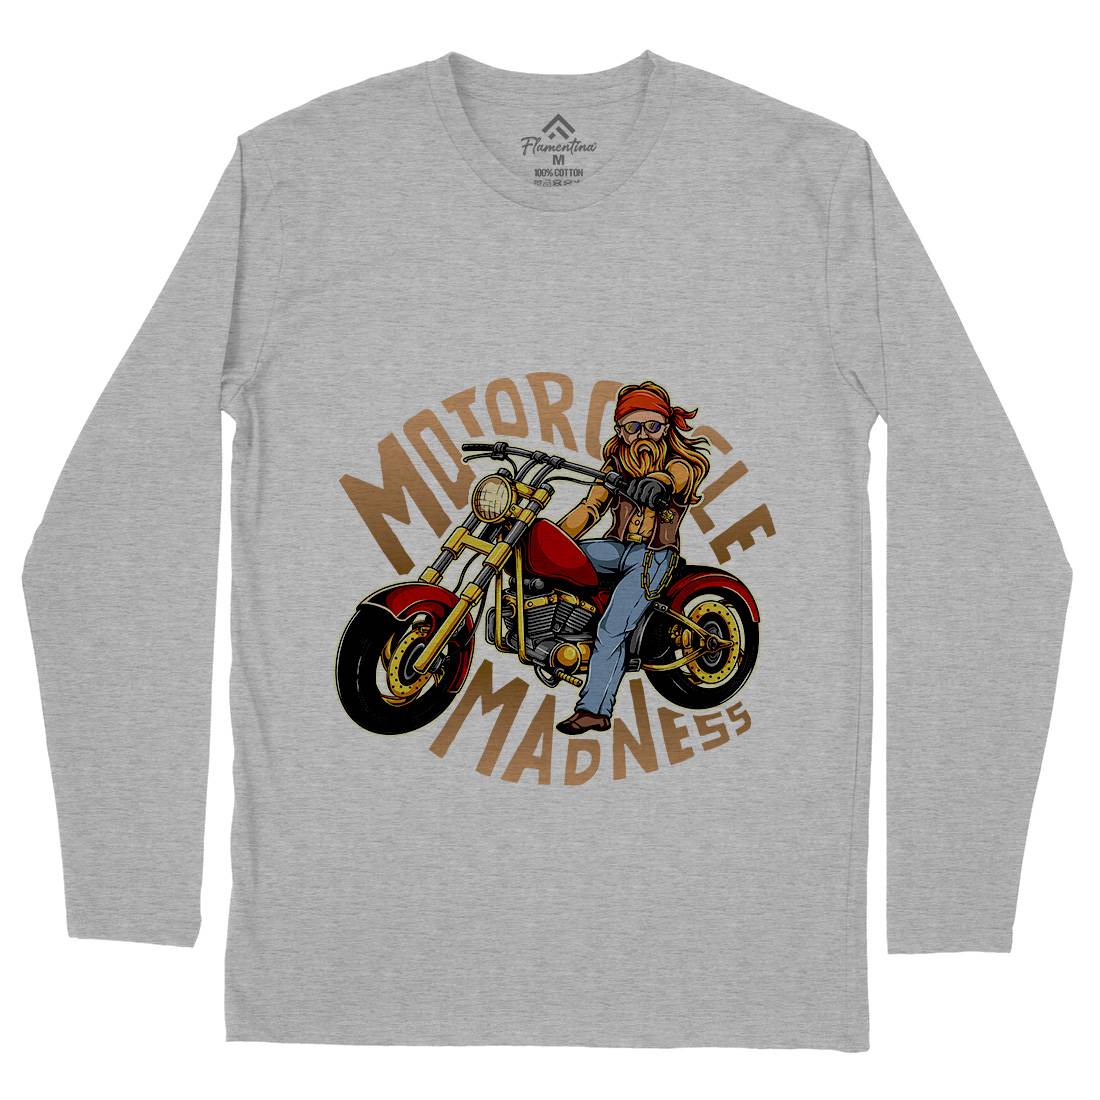 Madness Mens Long Sleeve T-Shirt Motorcycles A438